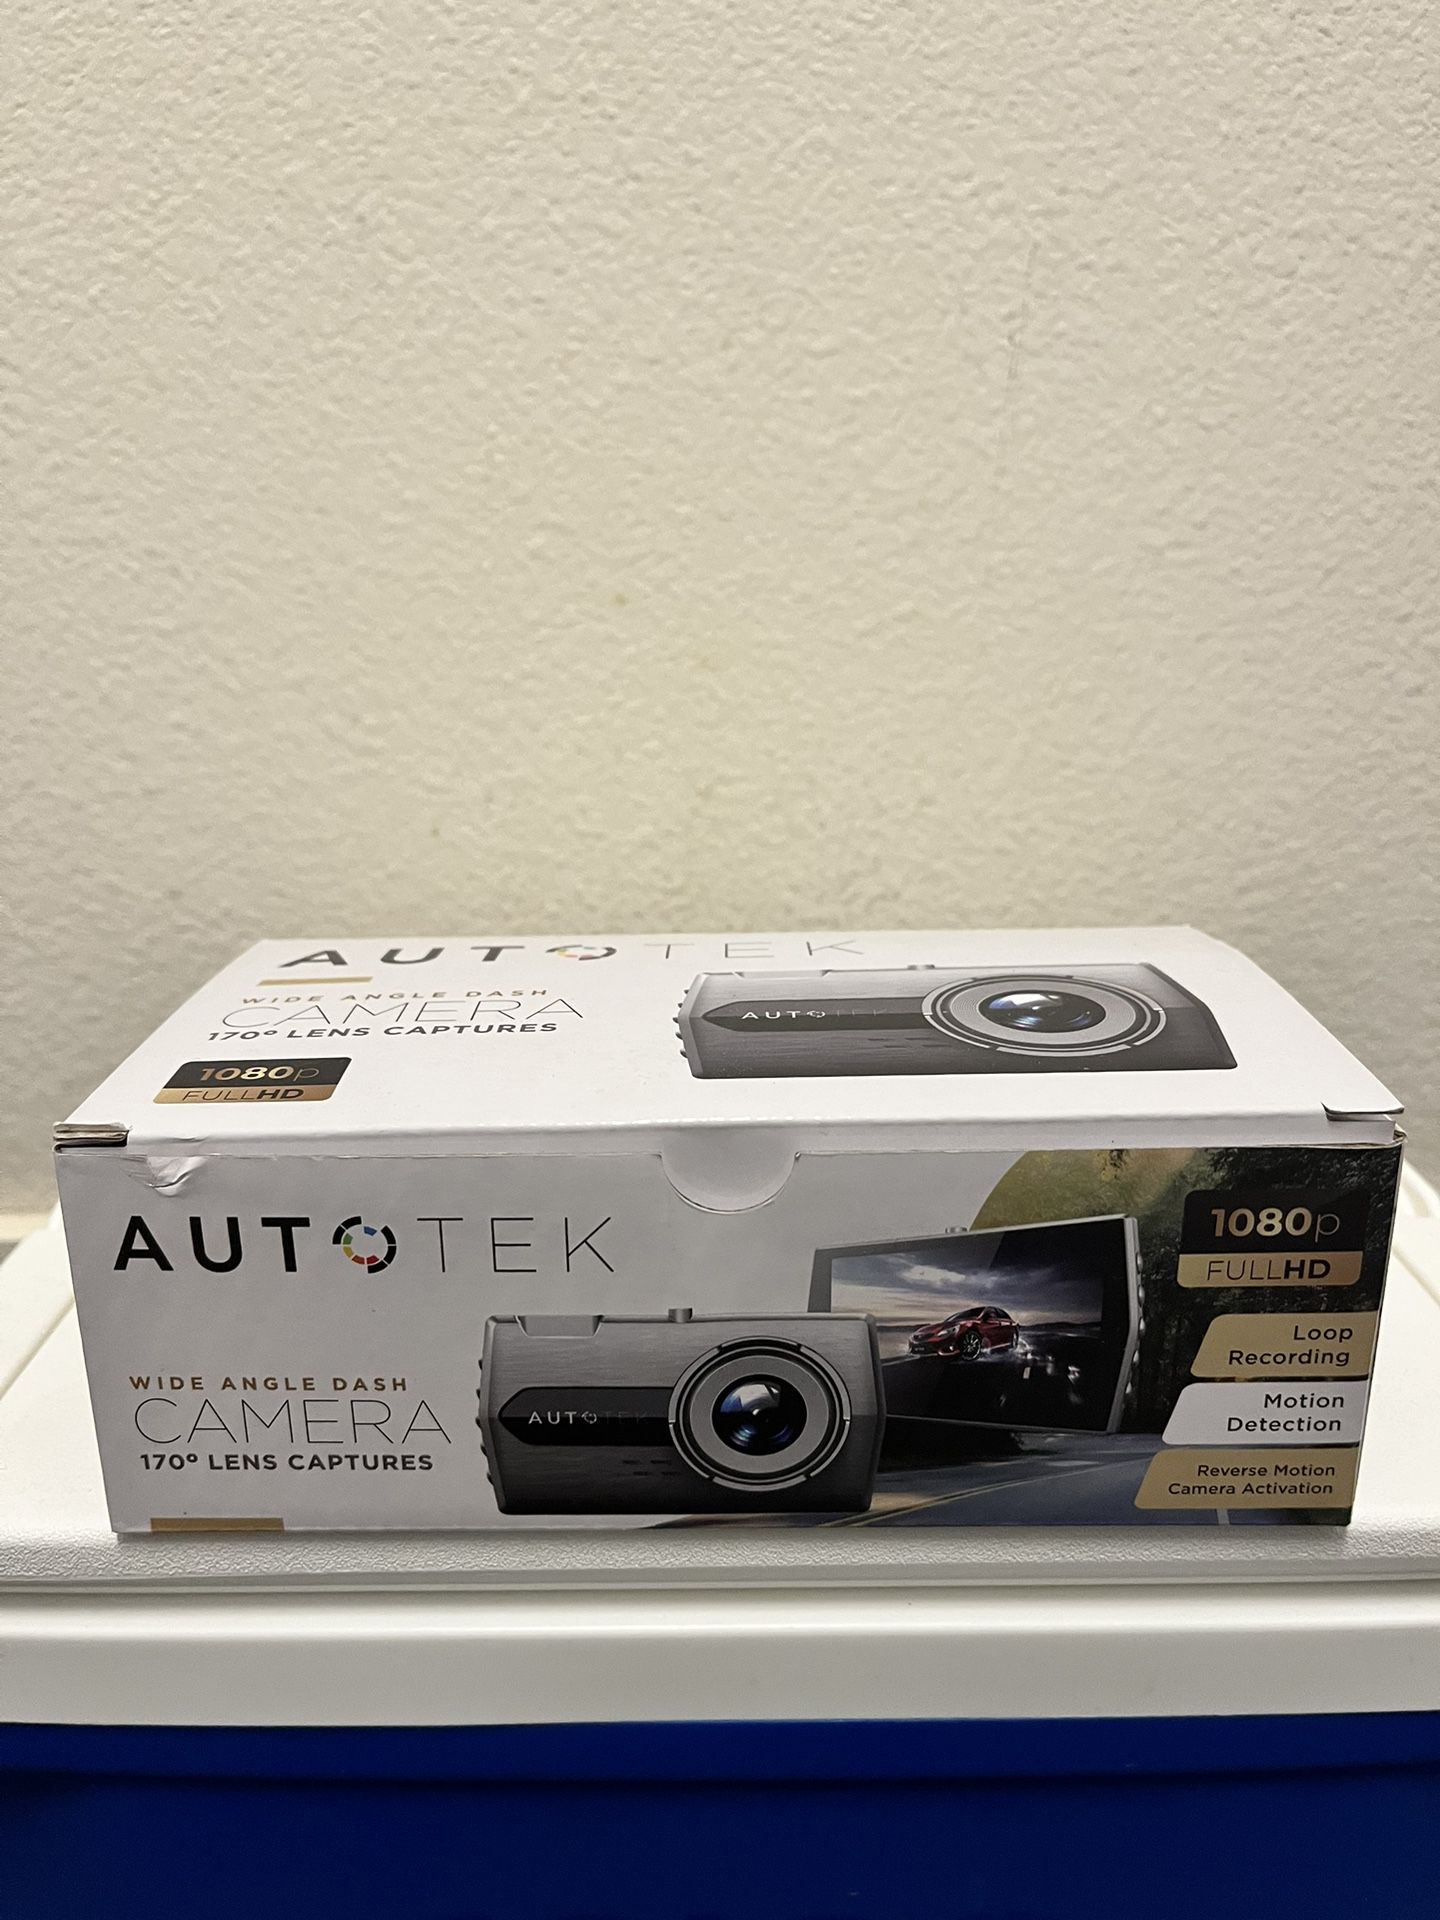 Auto Tek - Wide Angle Dash Camera - (New)